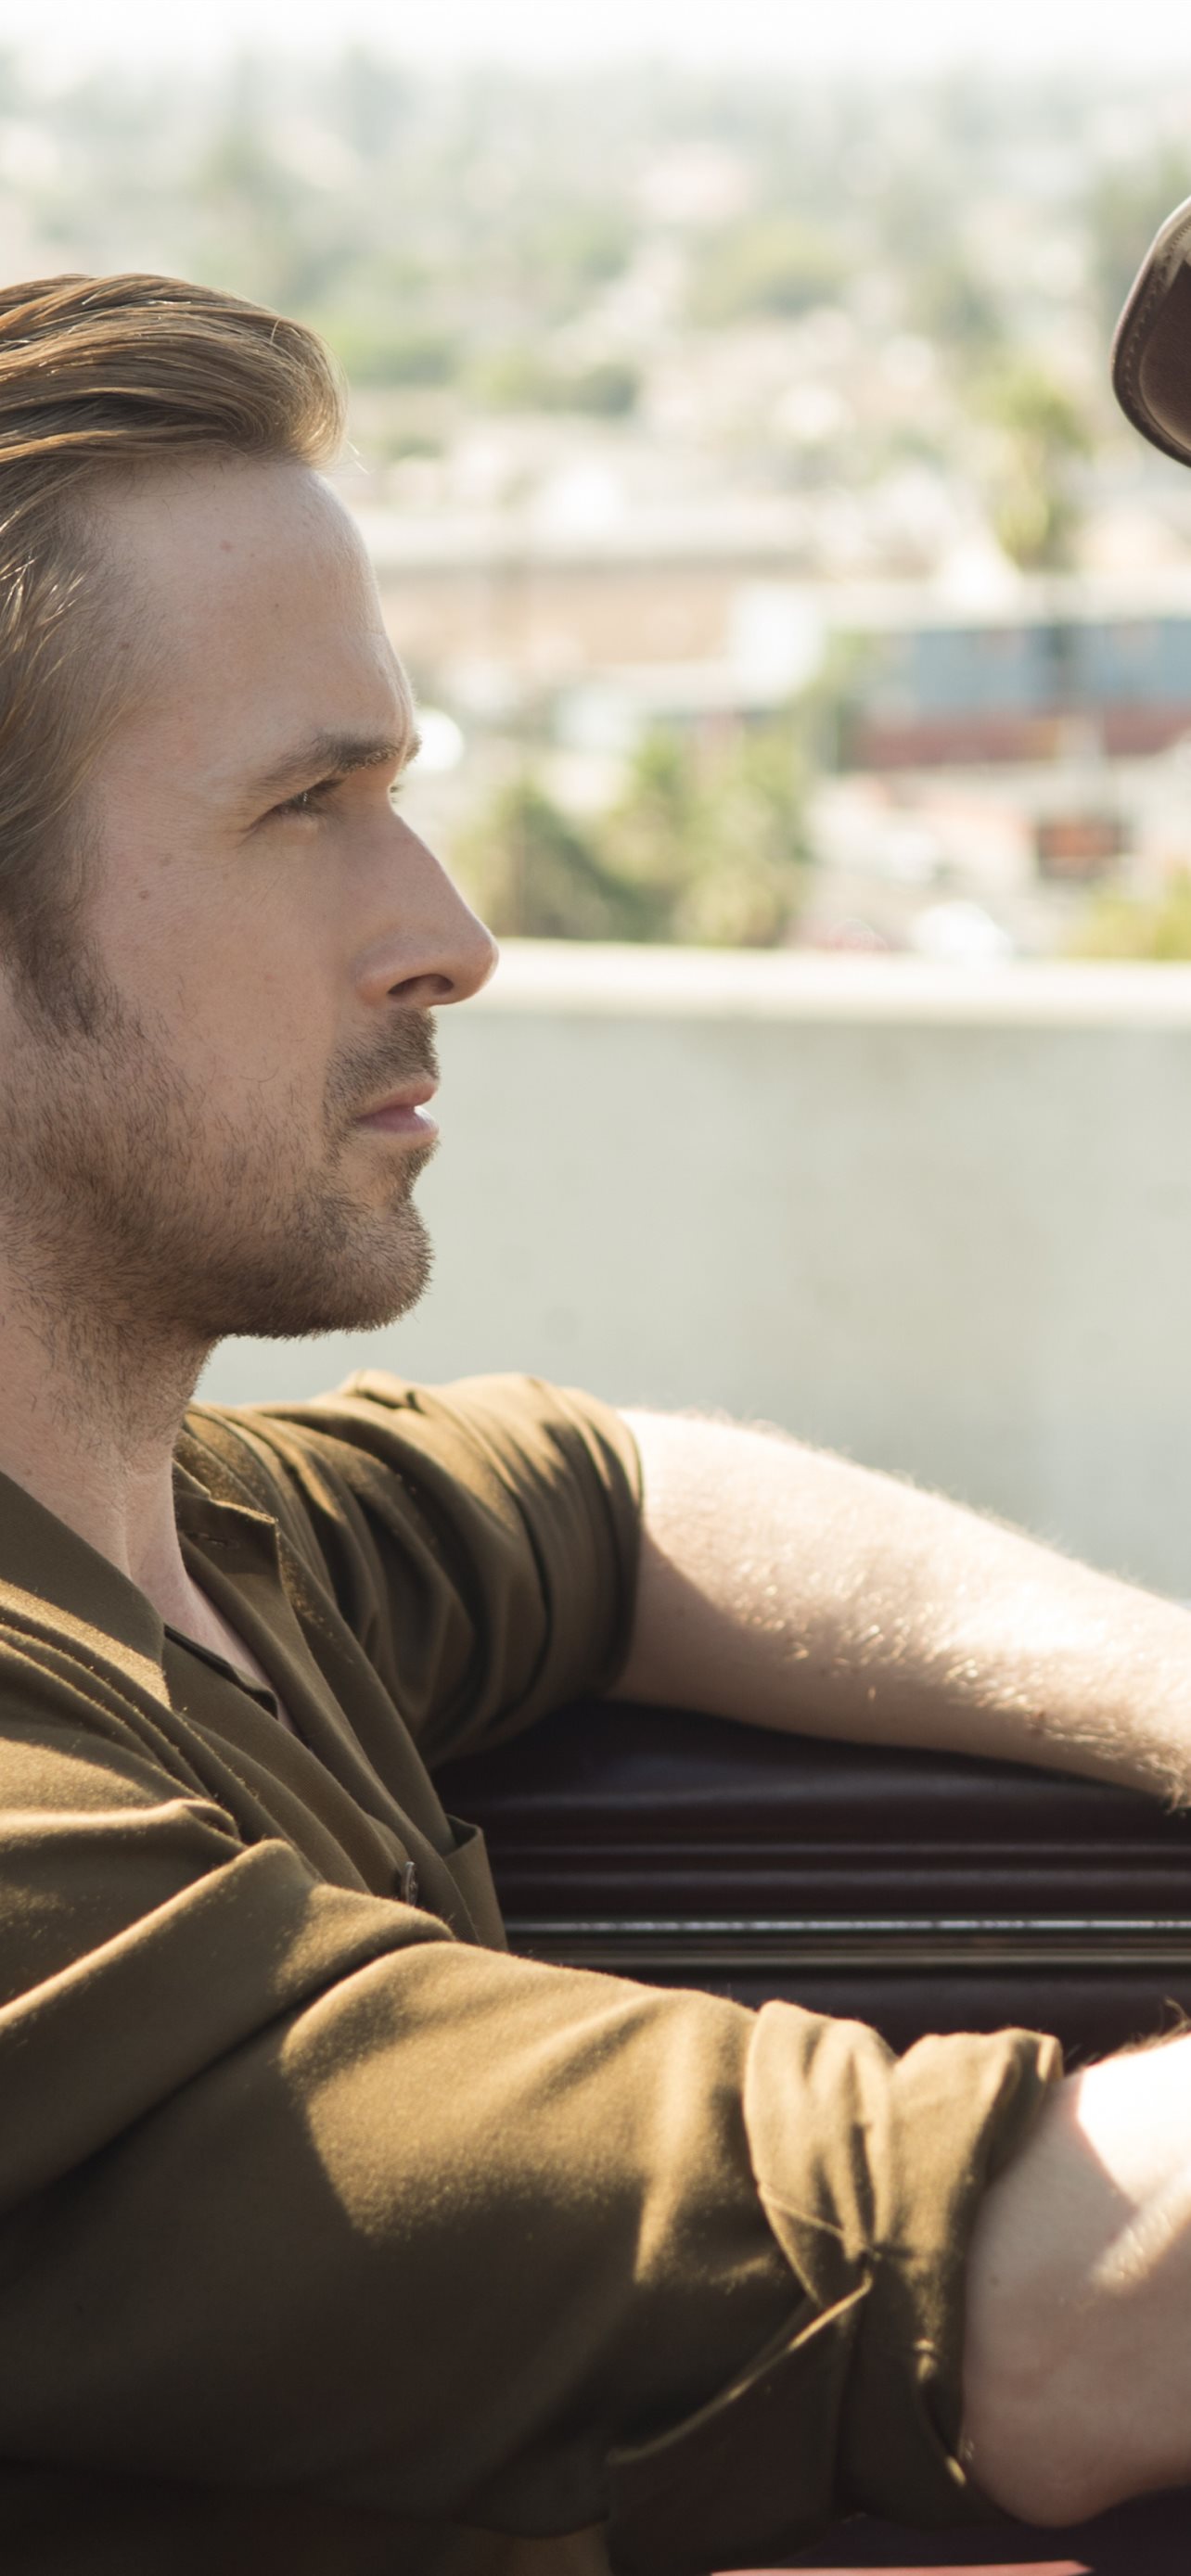 La La Land Ryan Gosling Movies iPhone Wallpapers Free Download